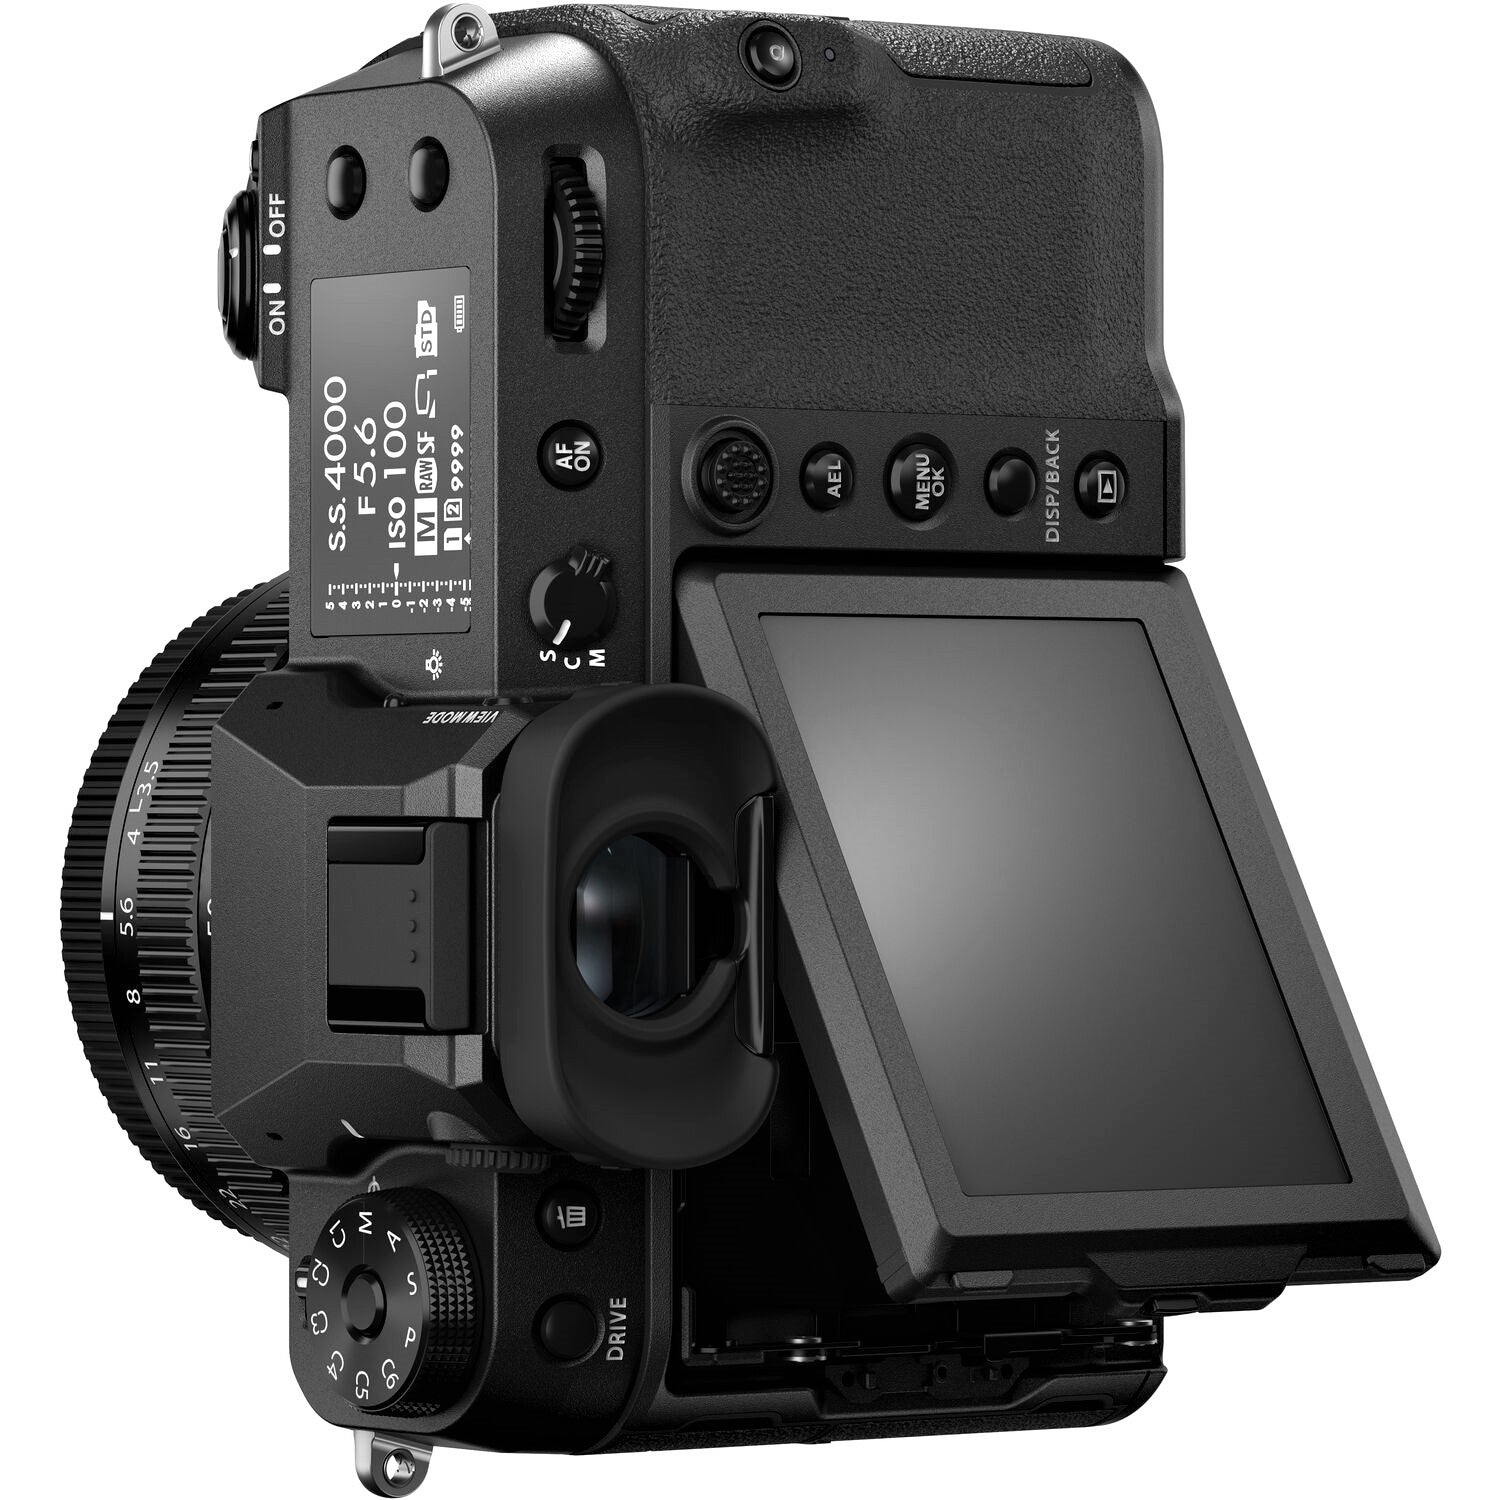 Fujifilm GFX 100S Medium Format Mirrorless Camera